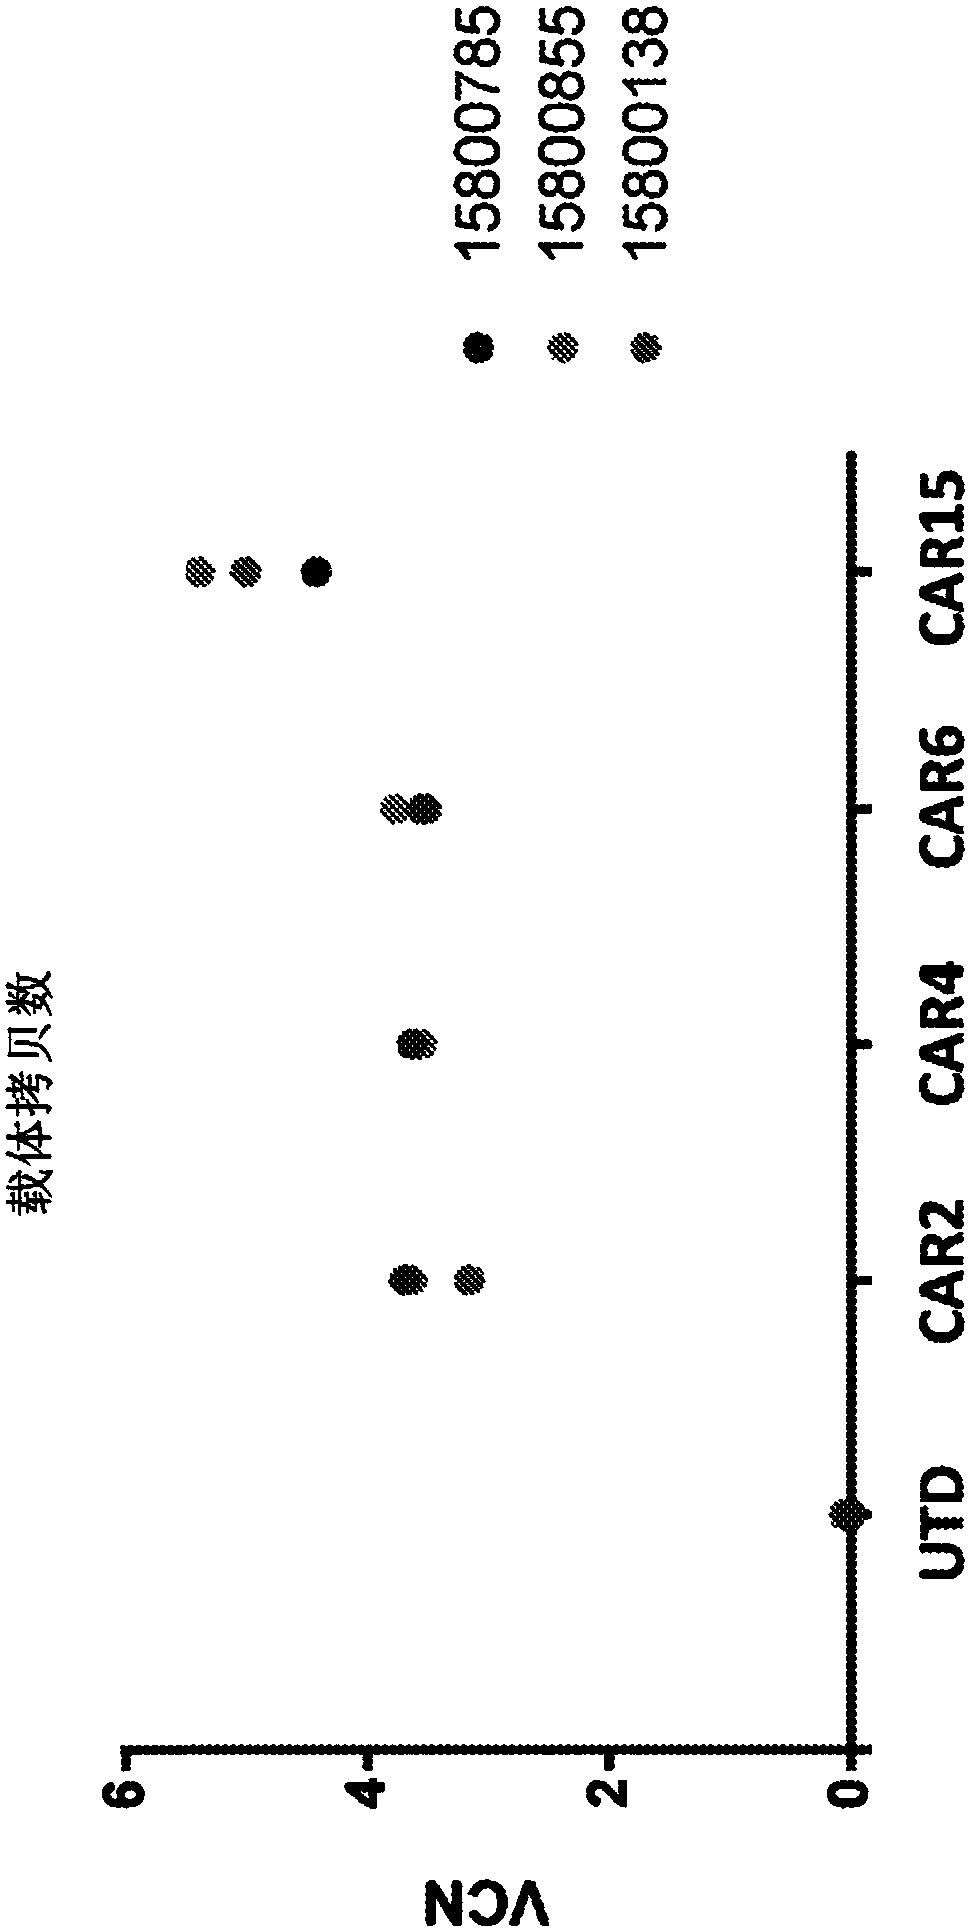 Anti-ROR1 chimeric antigen receptors